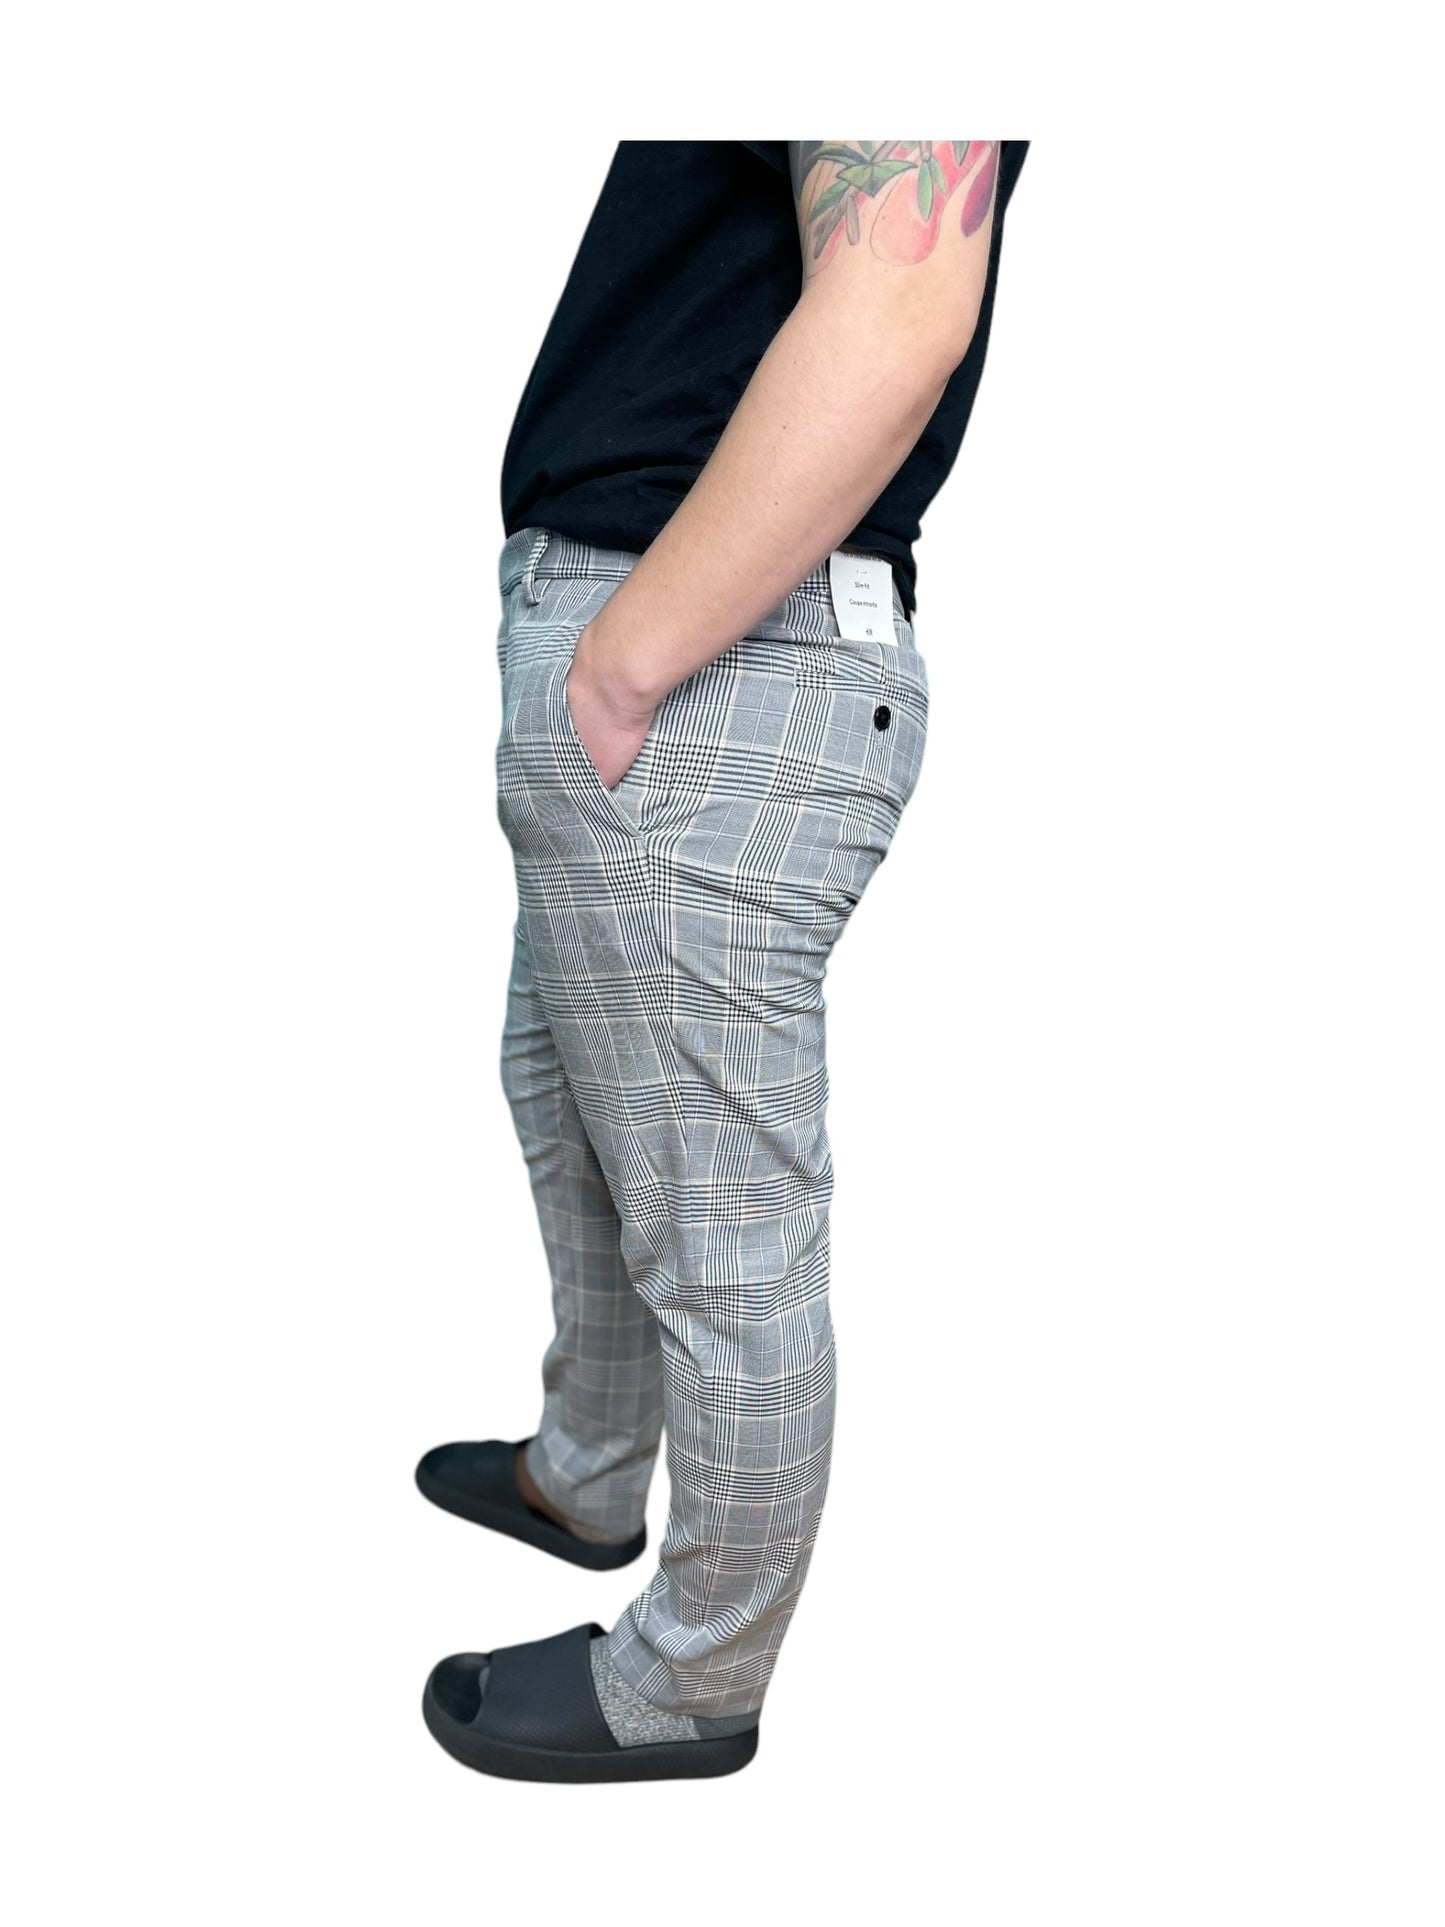 BNWT Grey Plaid Dress Pants (34)